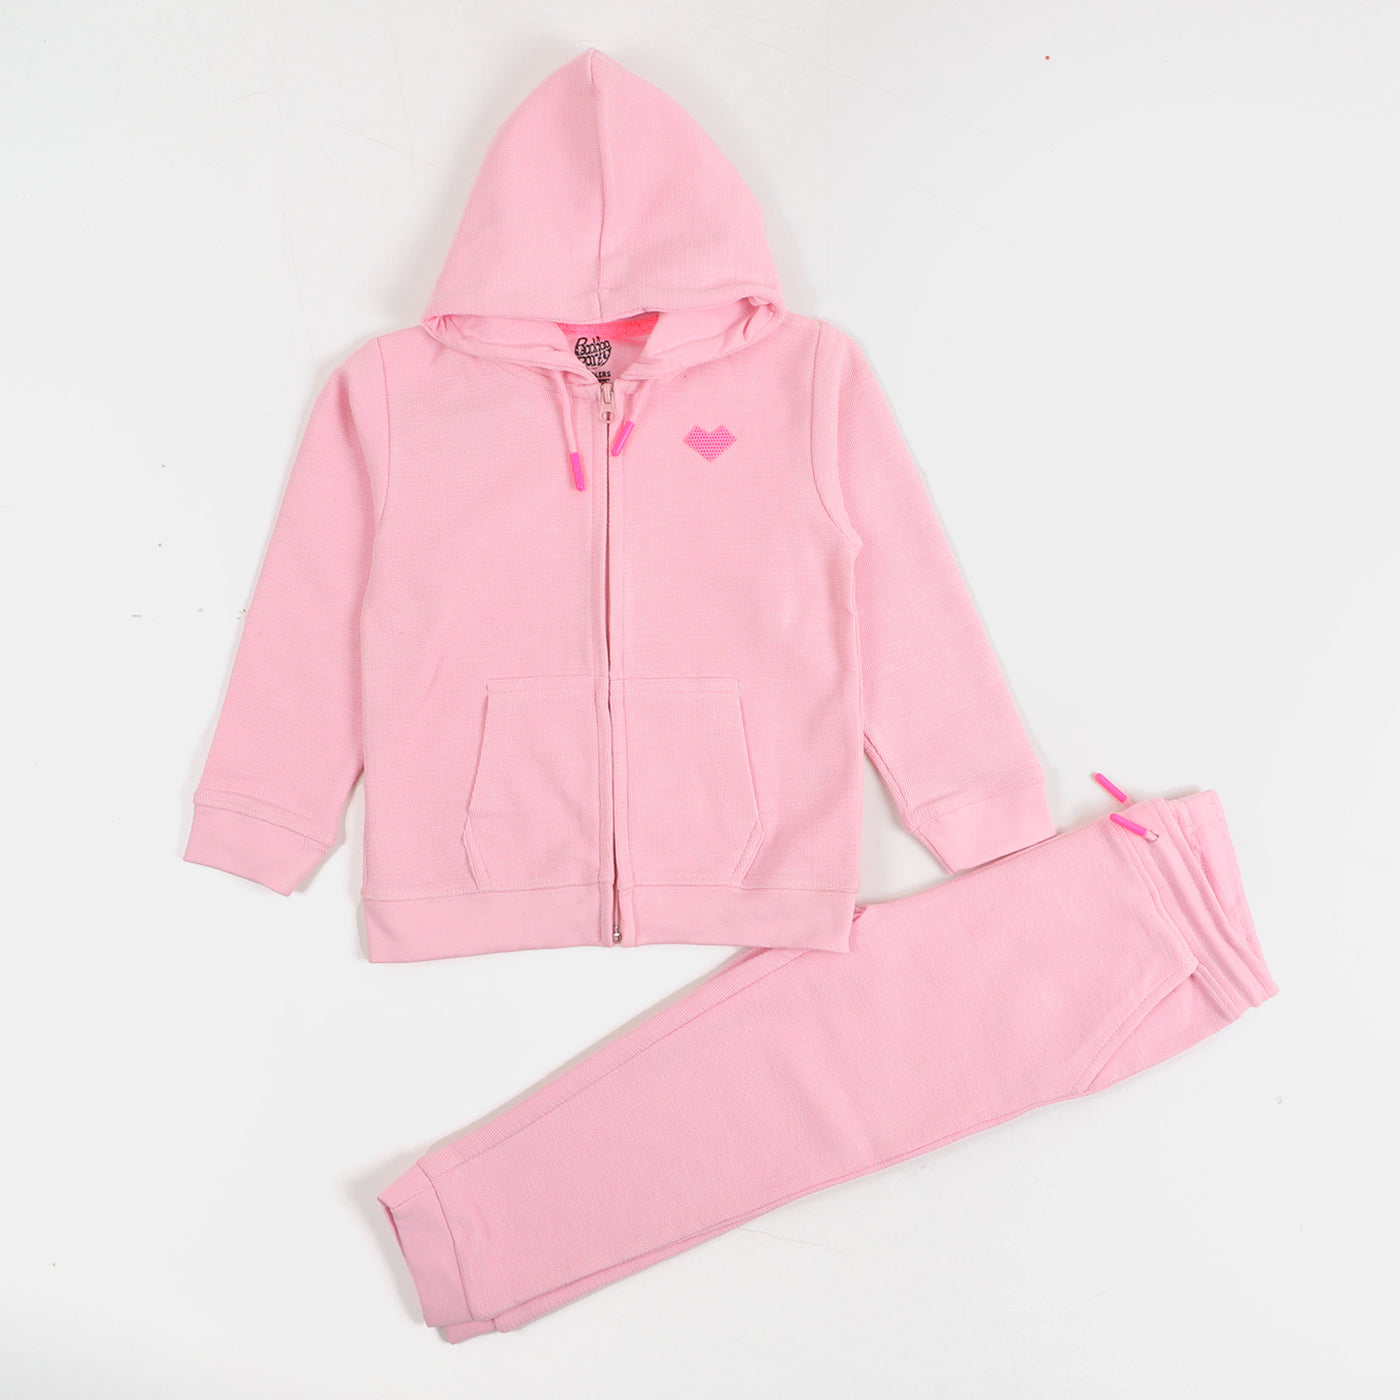 Girls Thermal Suit 04 - Pink